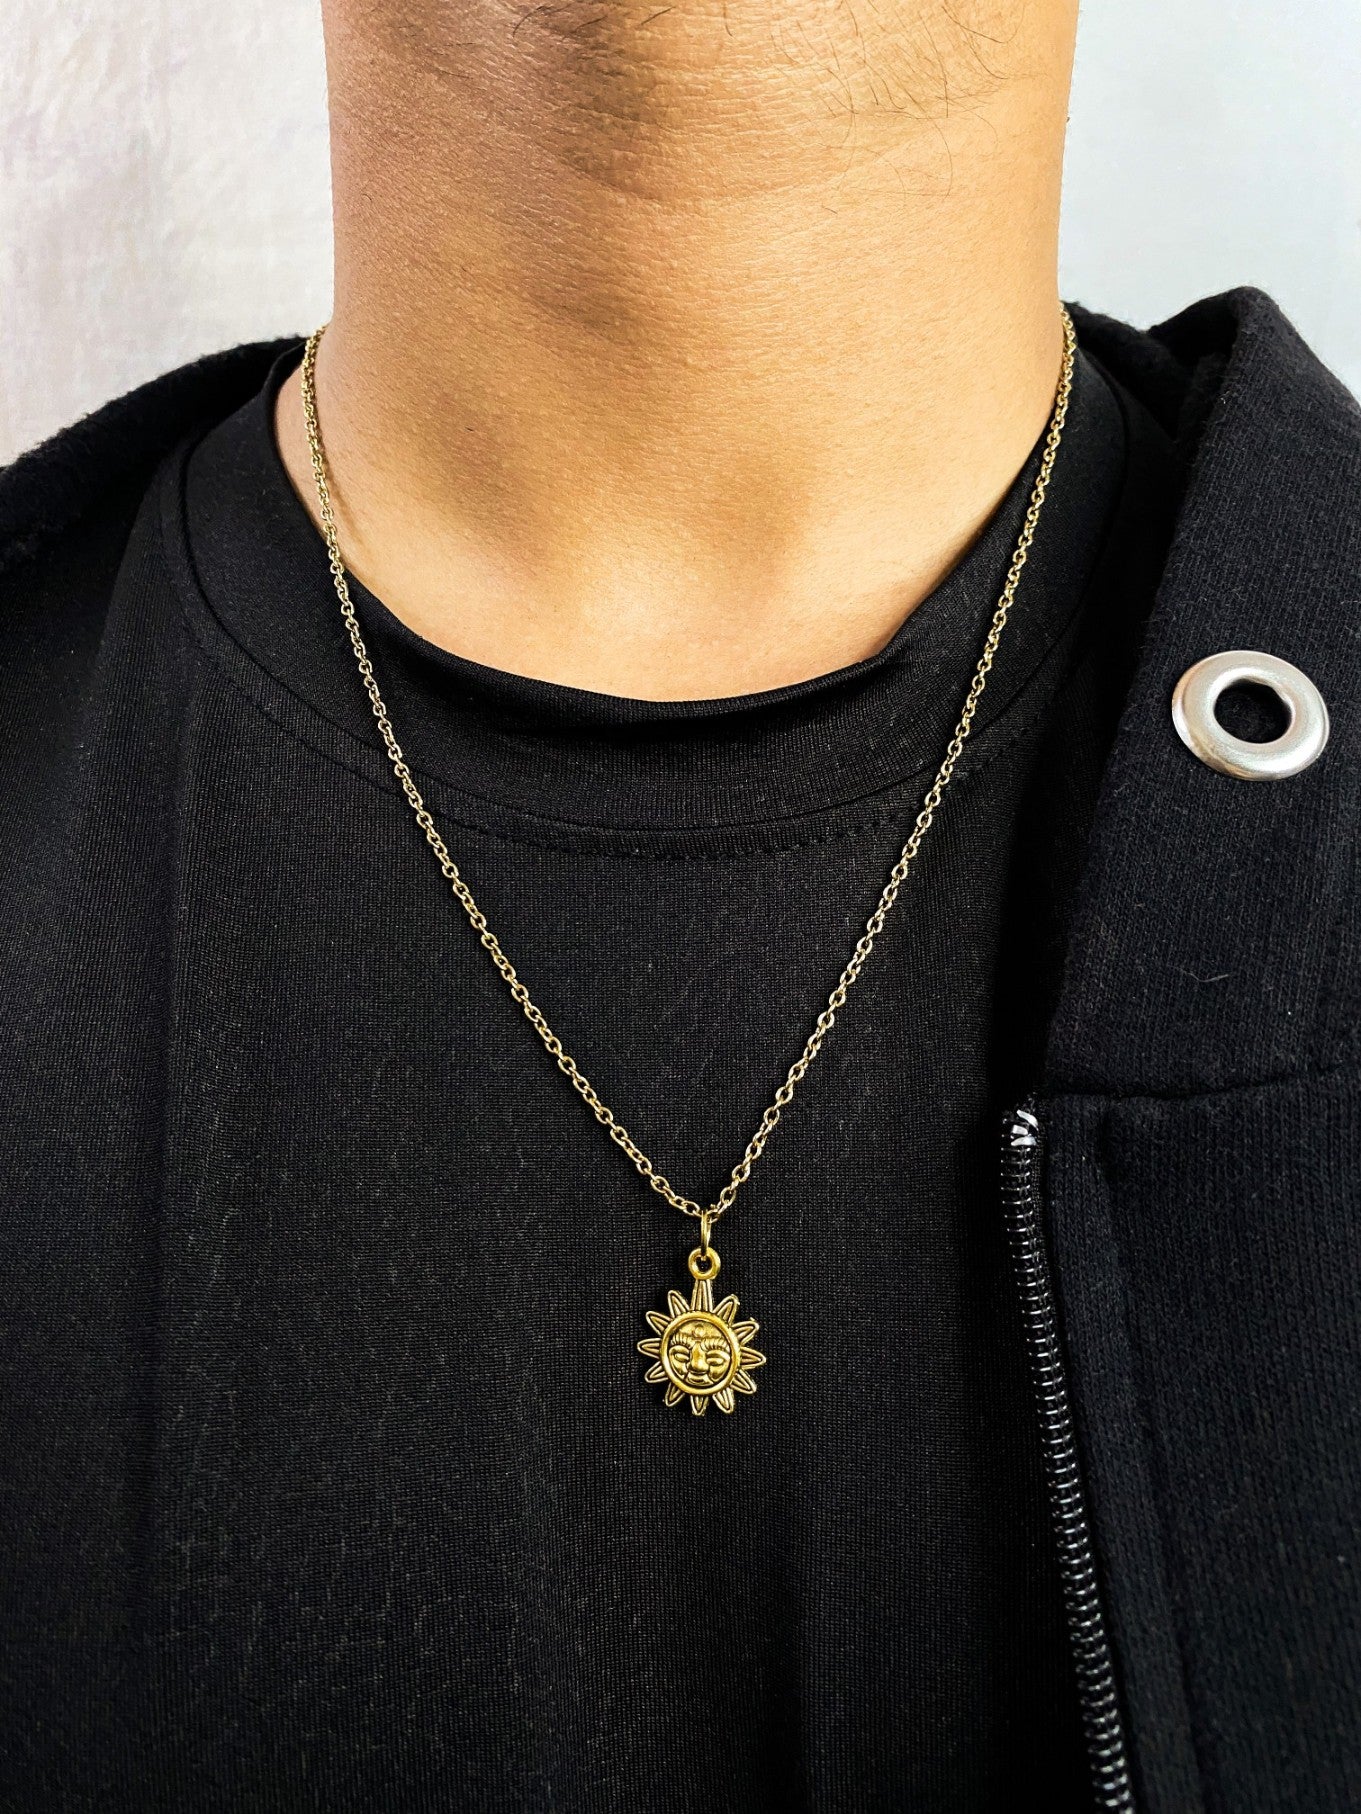 Movado |Men's gold pendant on chain